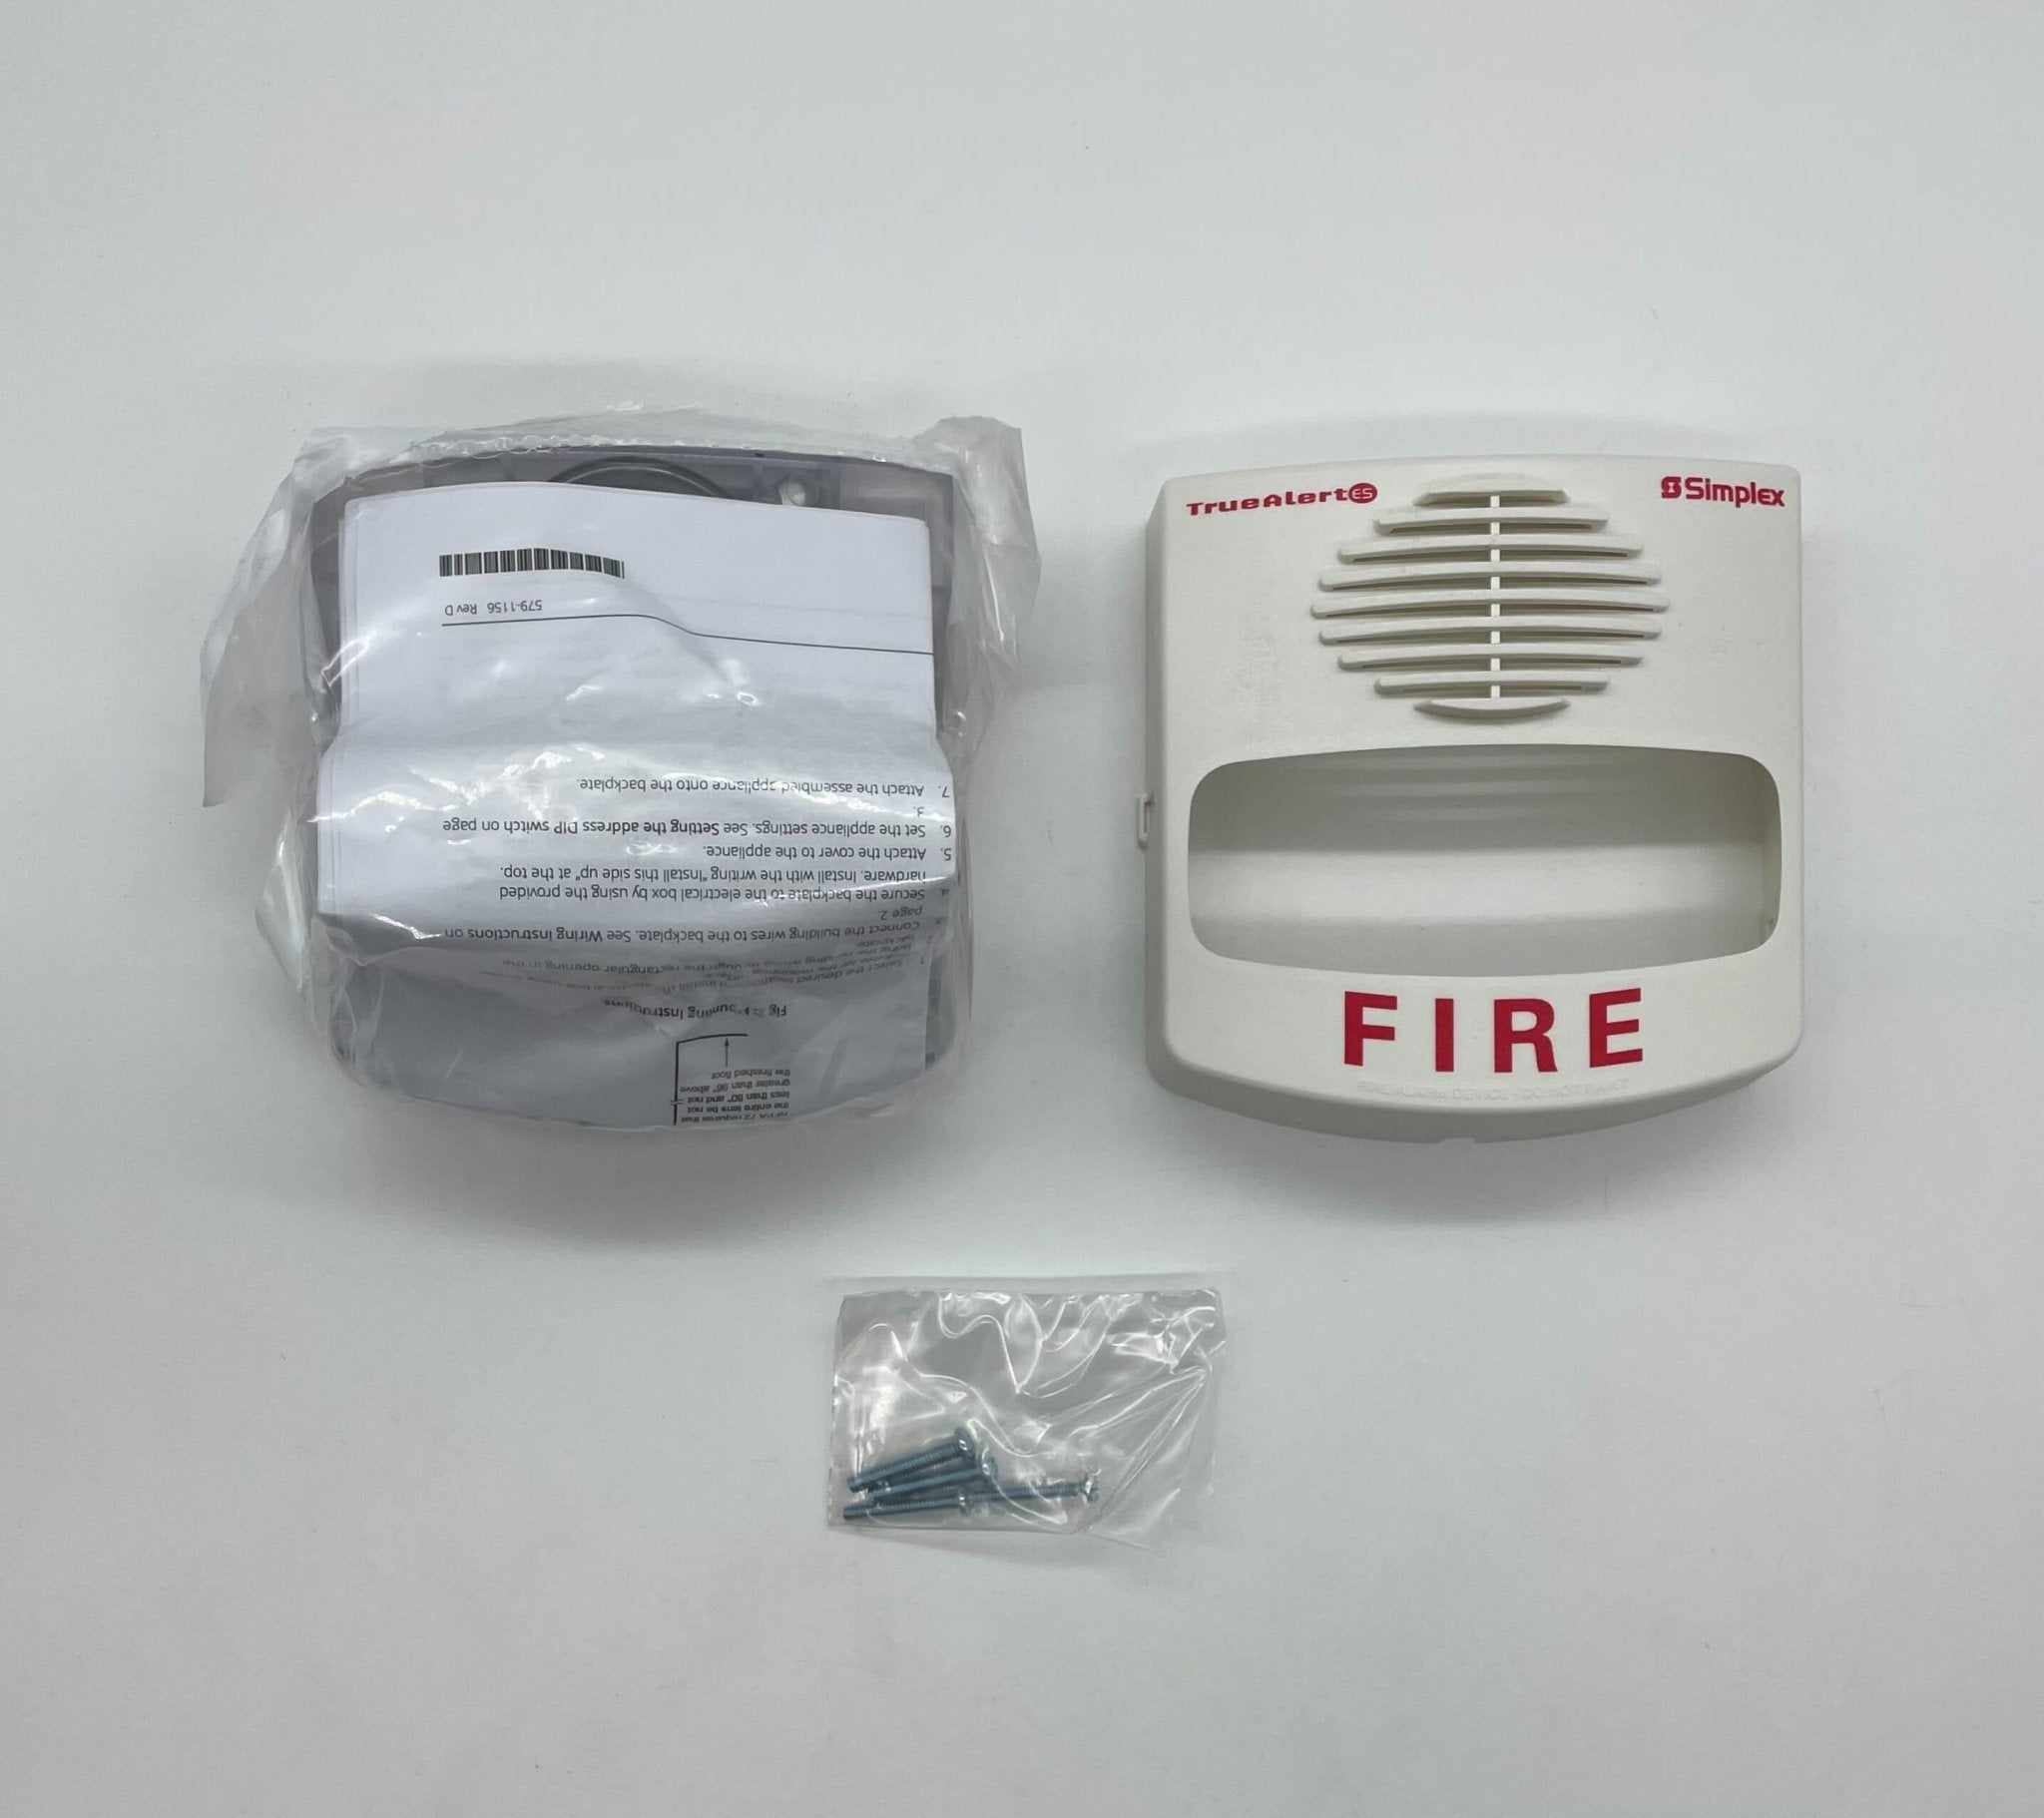 Simplex 49MTV-WWF - The Fire Alarm Supplier